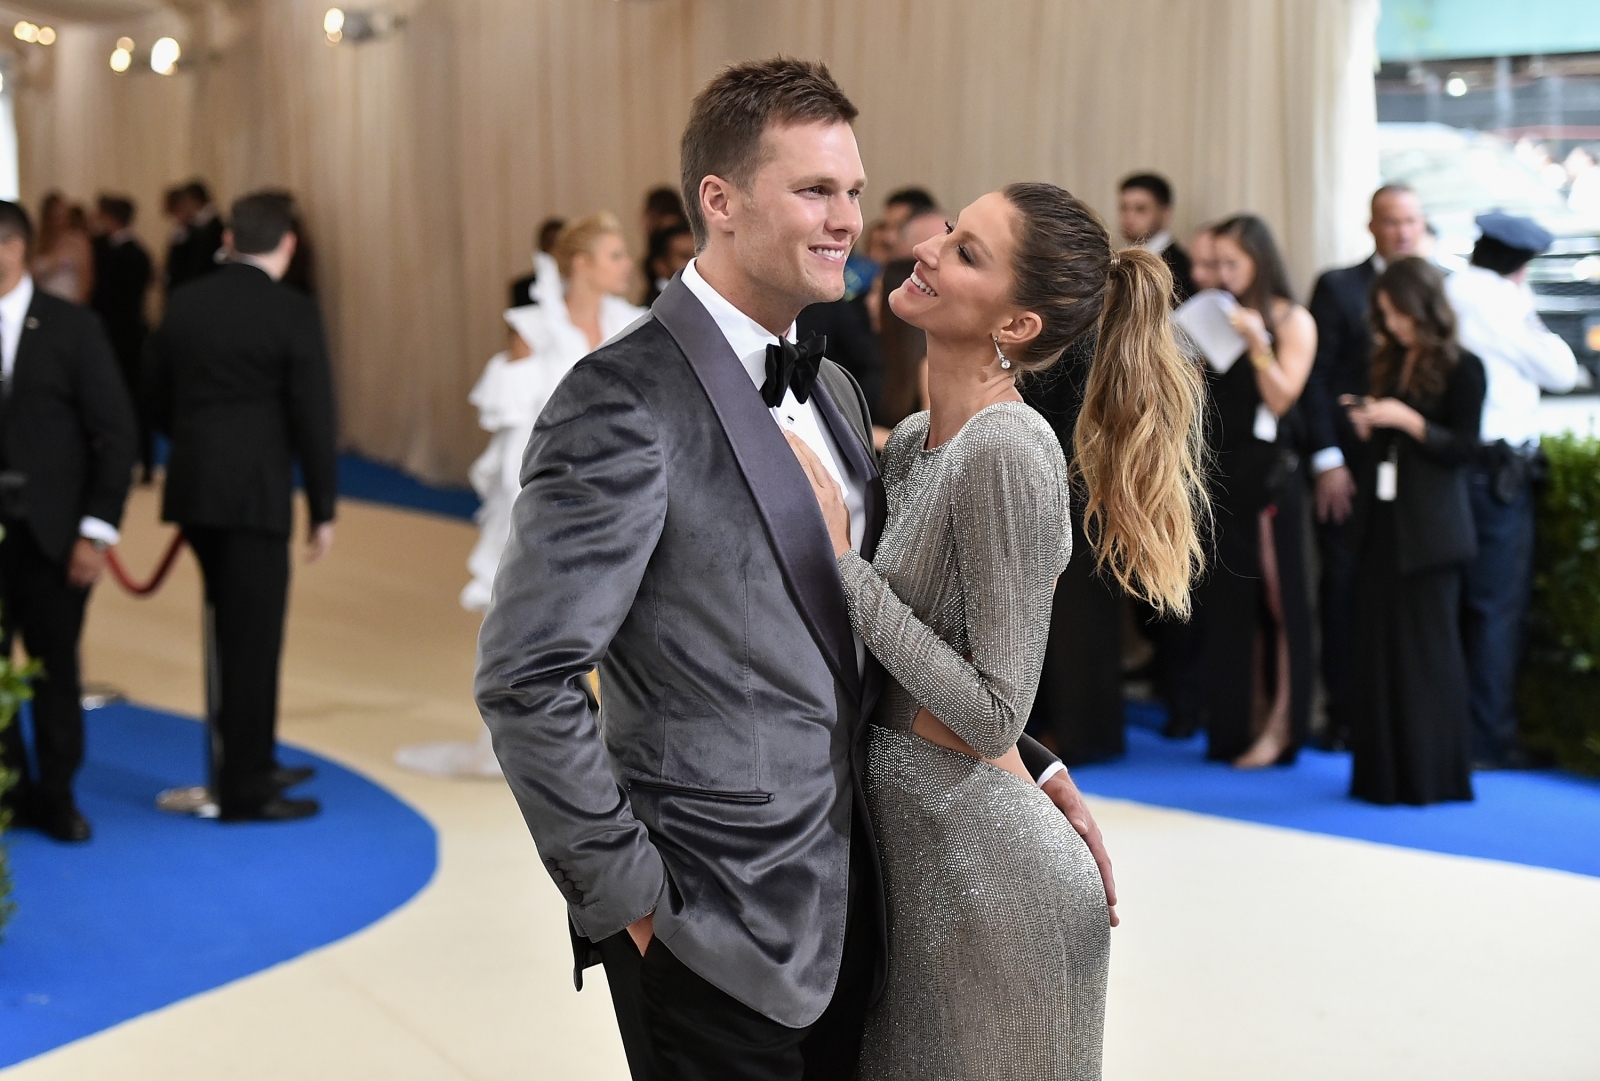 Why Nfl Star Tom Brady Is Avoiding Sex With Supermodel